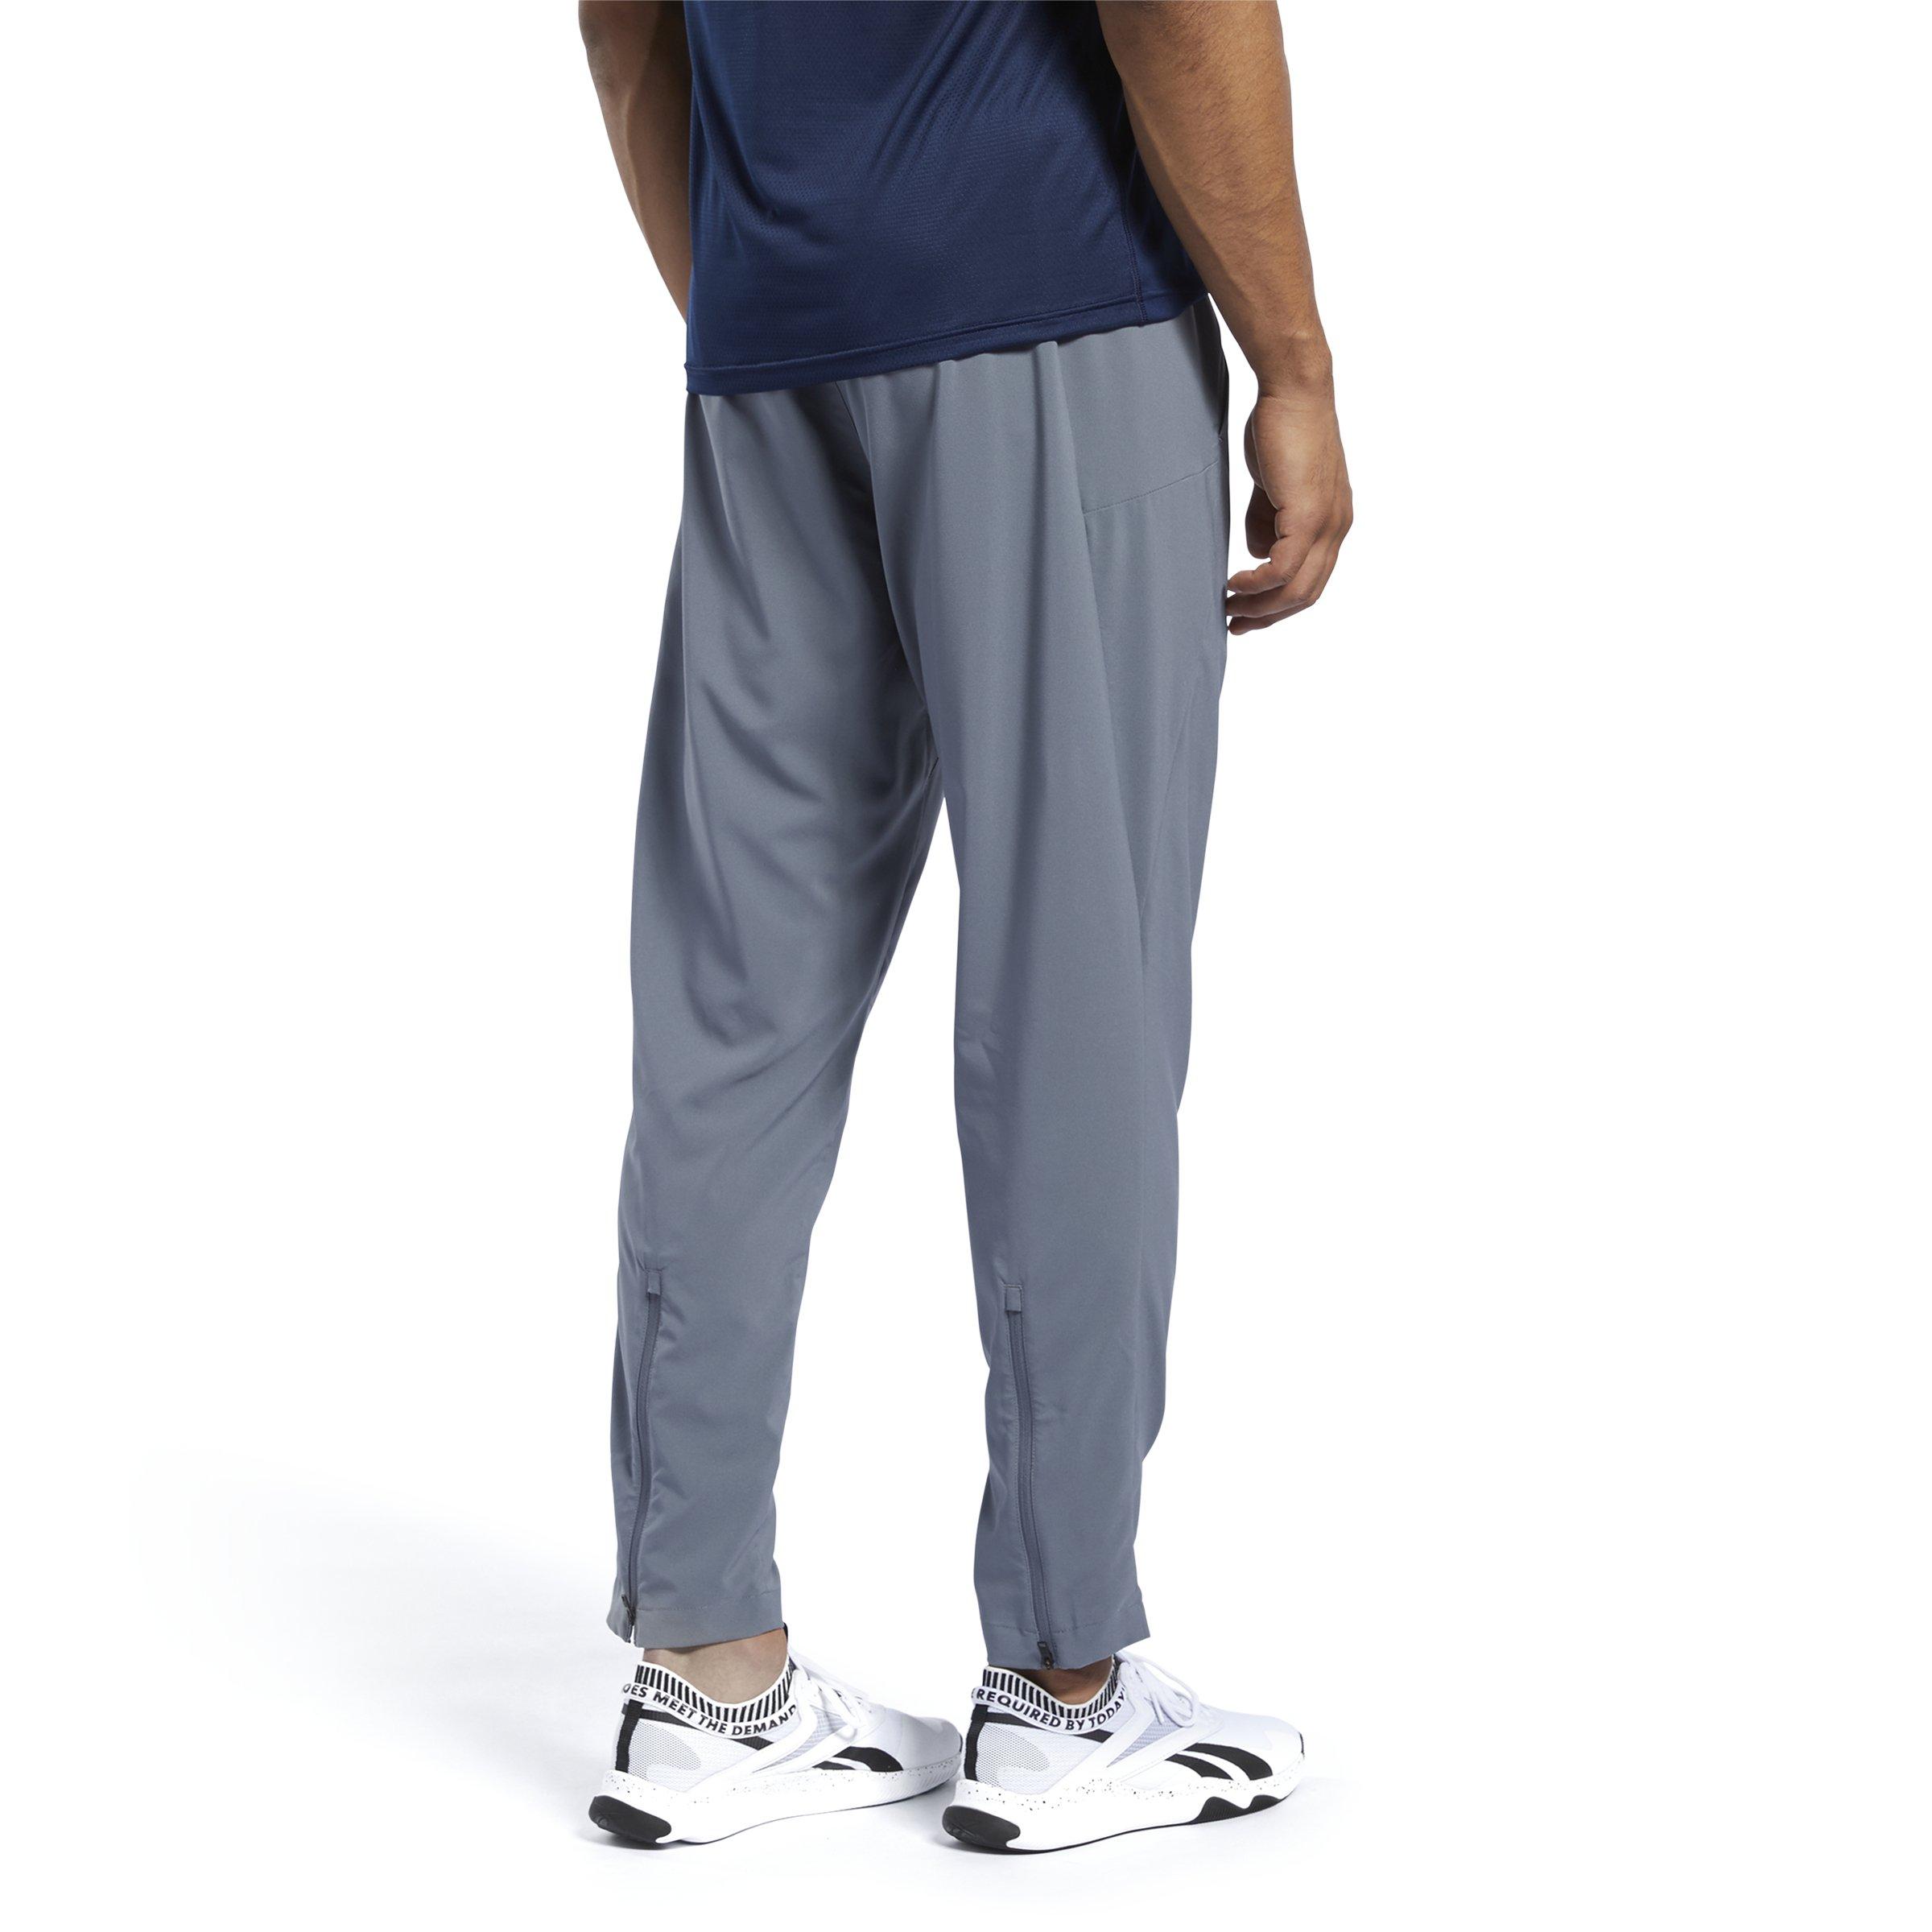 Reebok workout ready sweatpants in gray